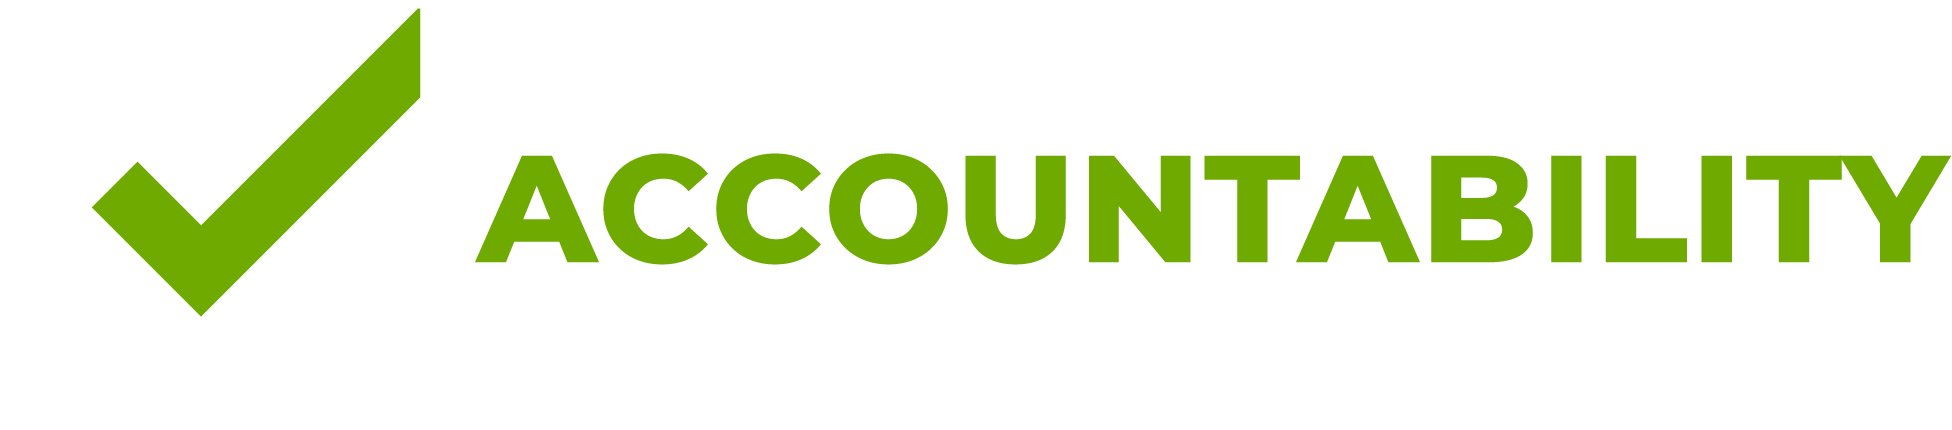 30 Day Challenge logo